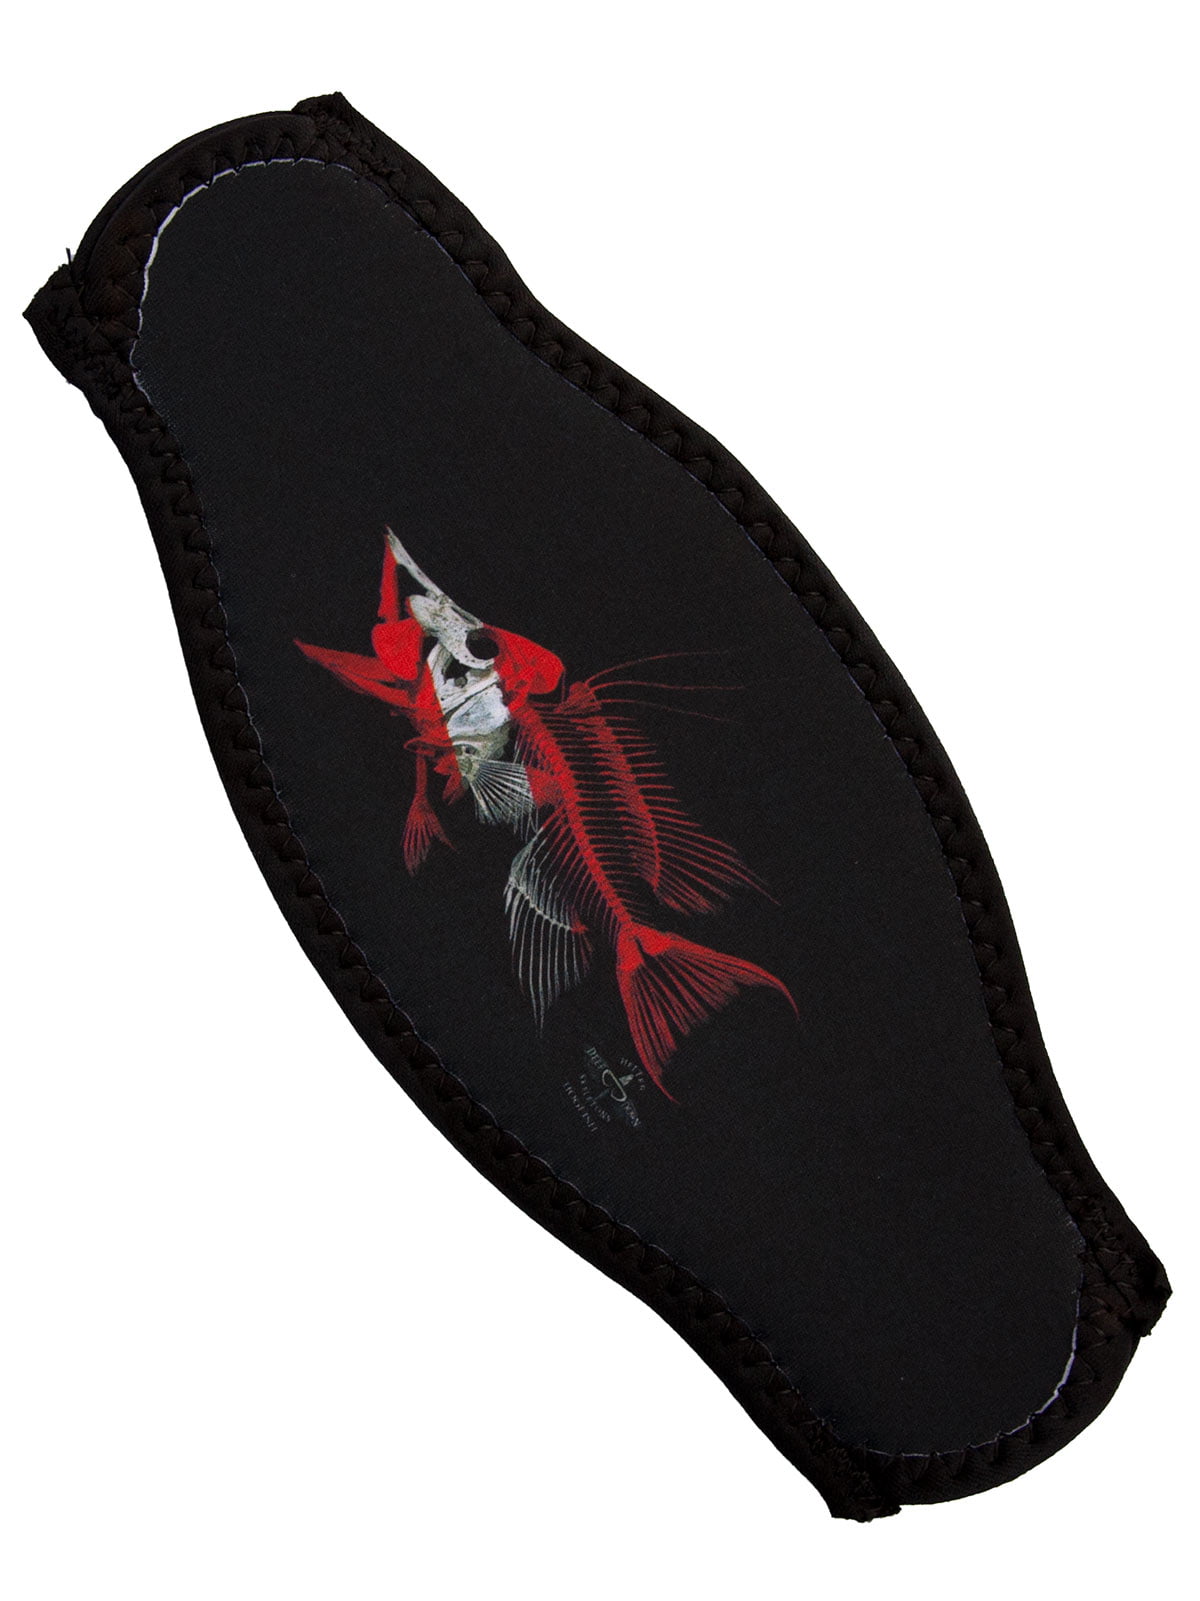 Strap Wrapper Neoprene Mask Strap Cover Red fish scales 